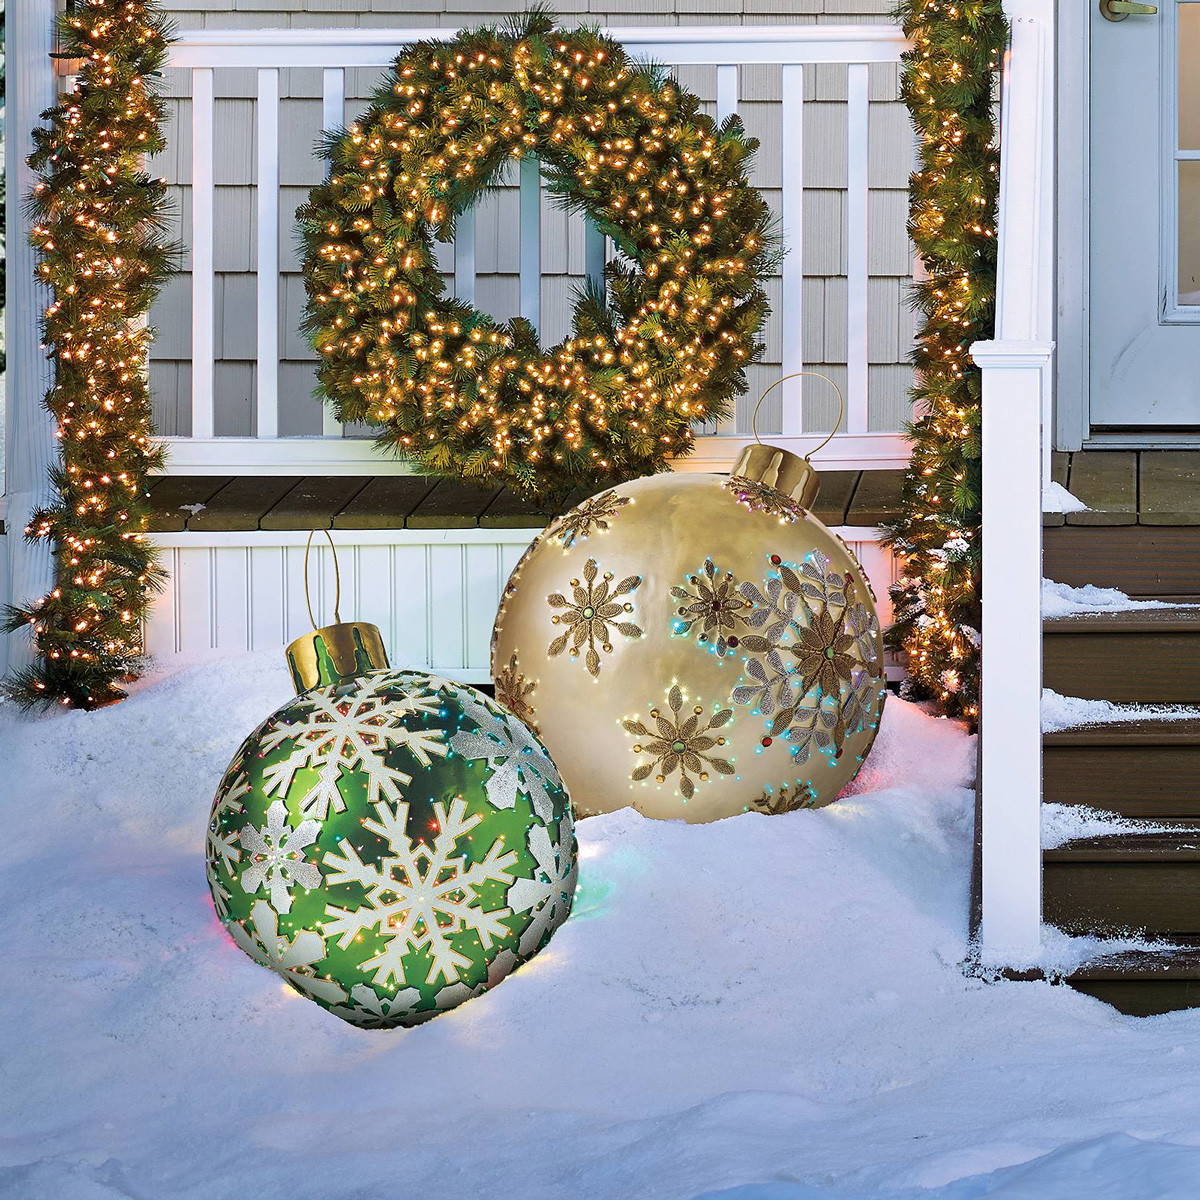 Discount Outdoor Christmas Decor
 Massive Fiber Optic LED Outdoor Christmas Ornaments The